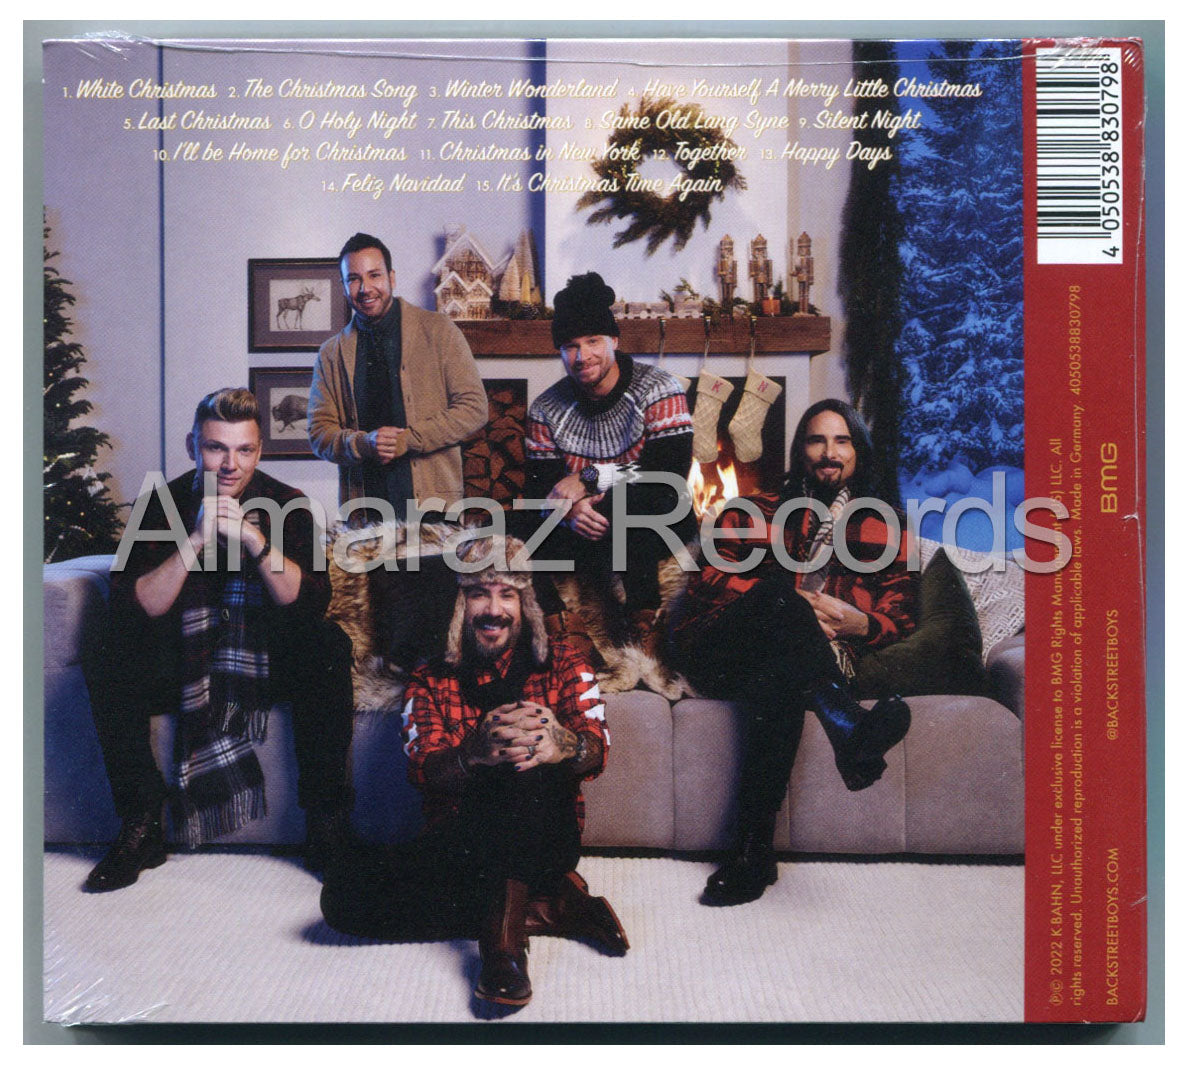 Backstreet Boys A Very Backstreet Christmas Deluxe CD [Importado]